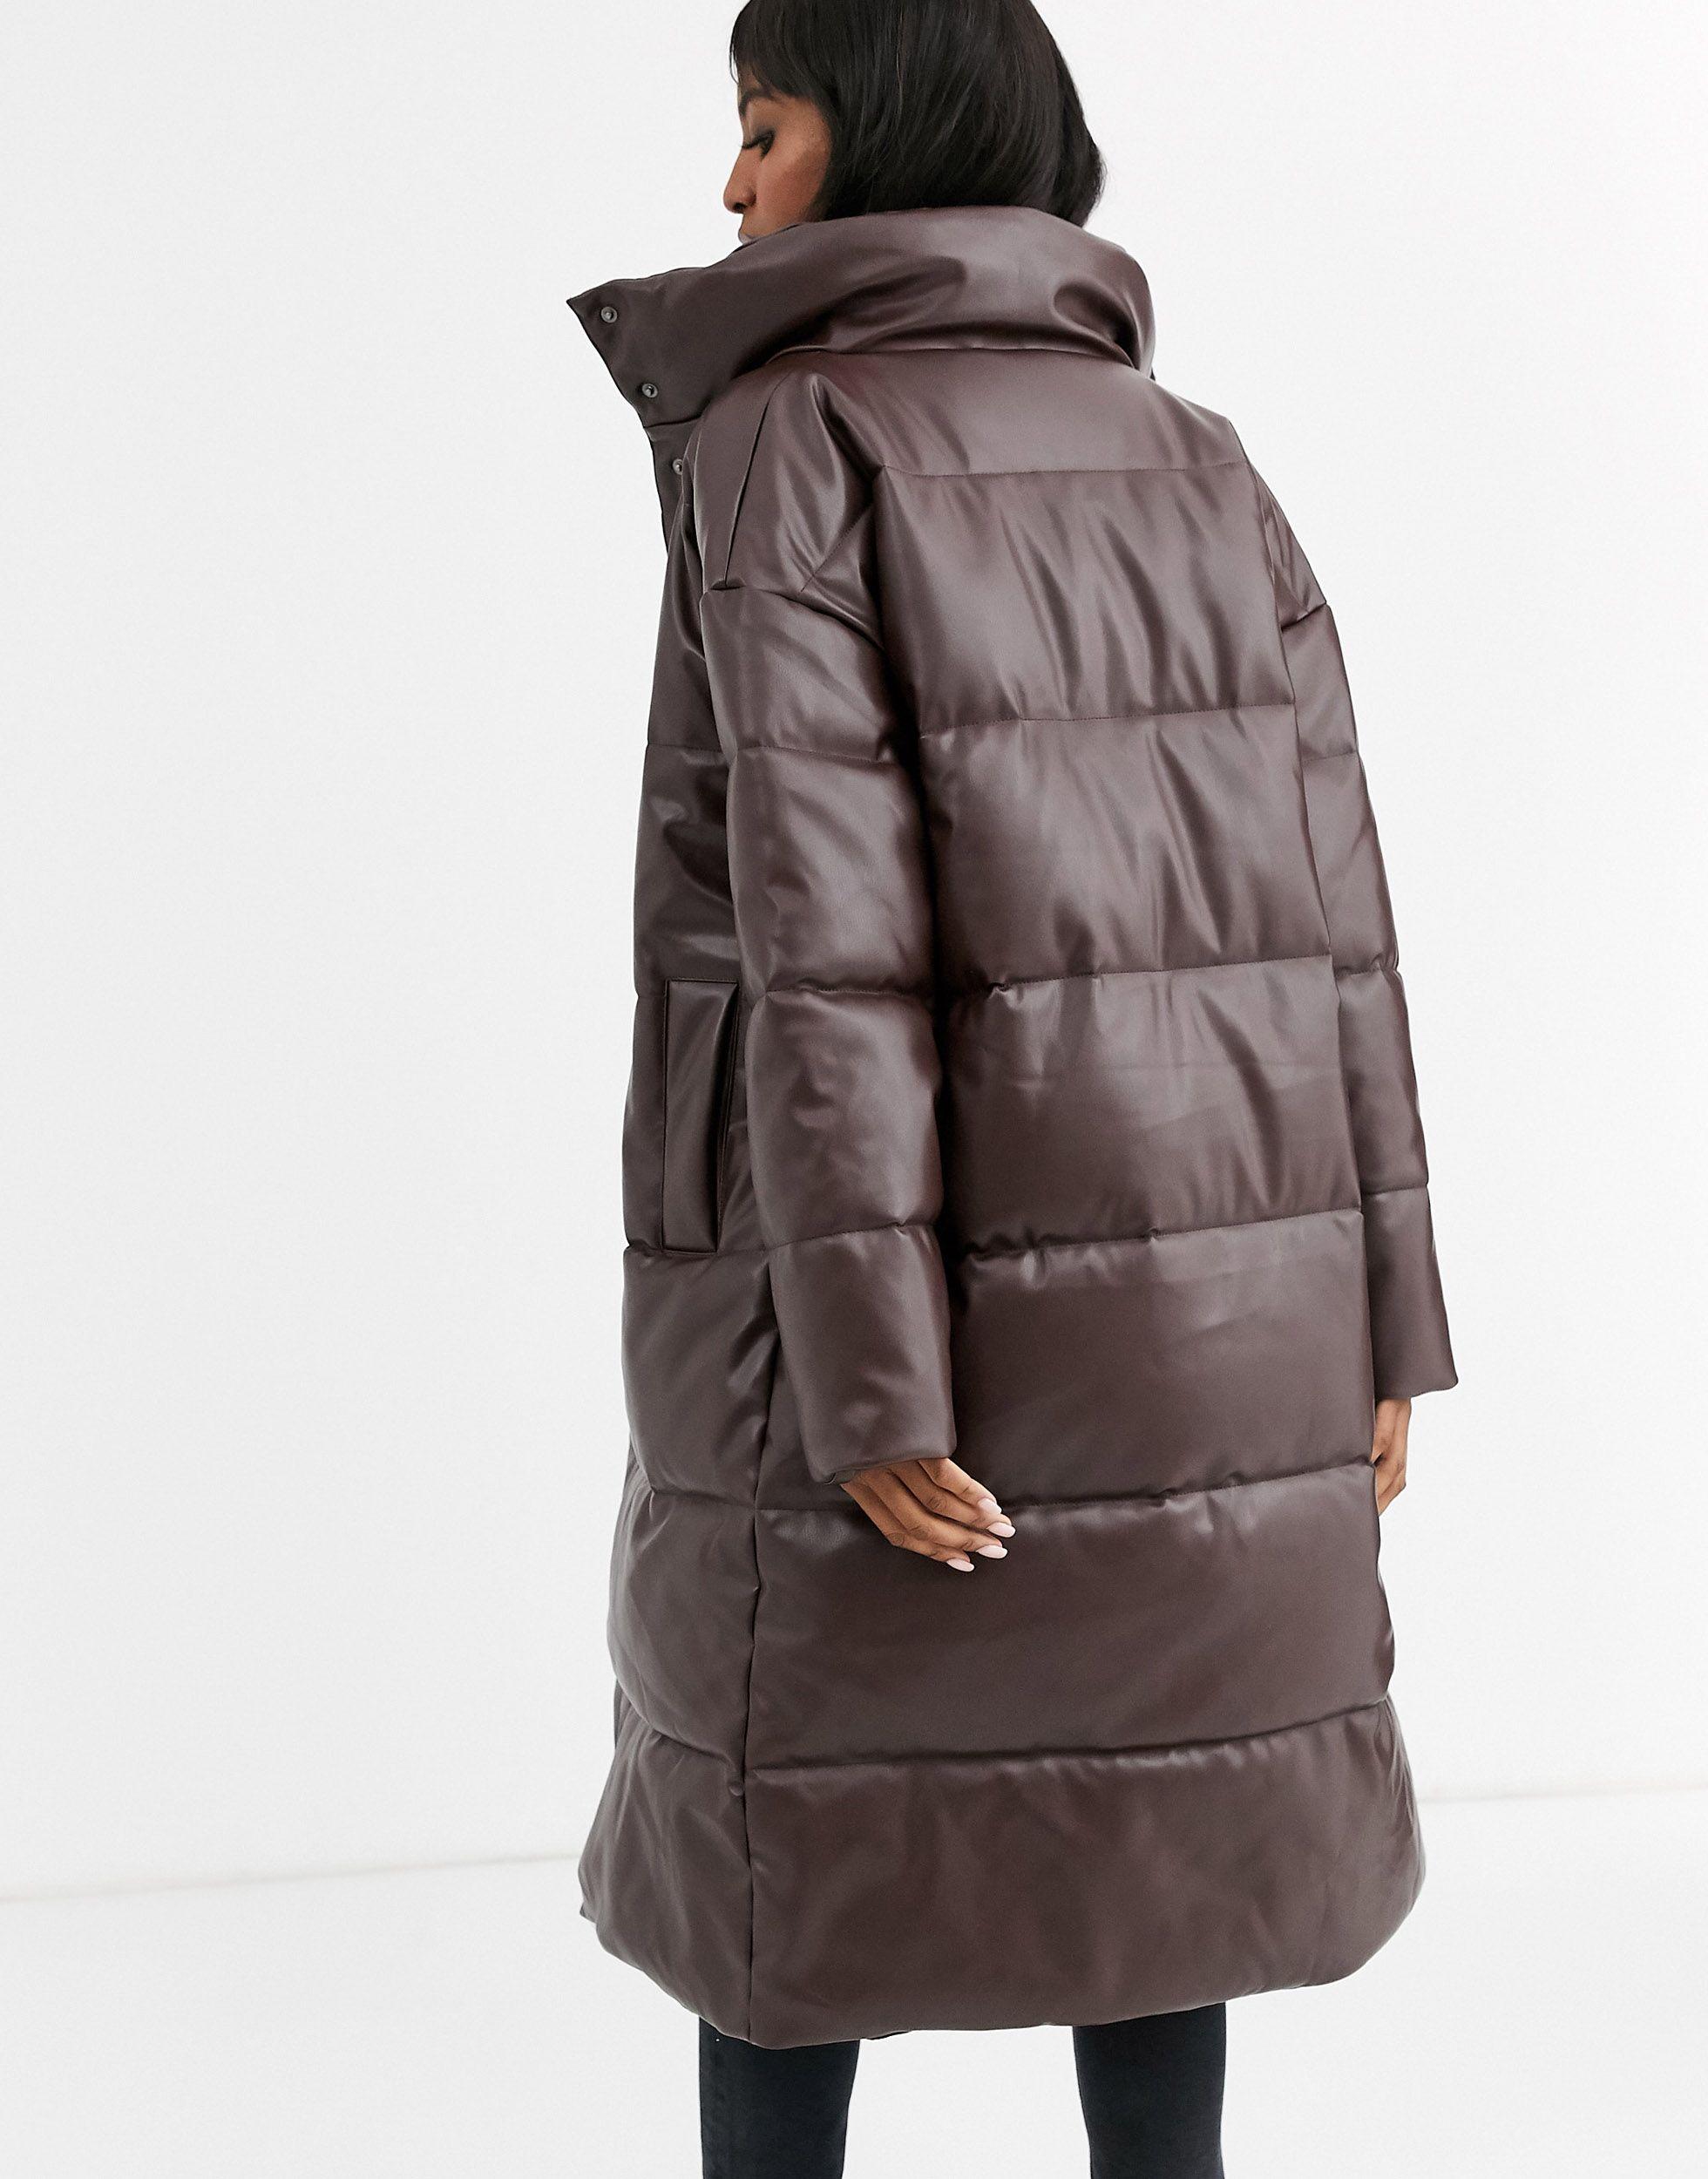 ASOS Asos Design Tall Longline Leather Look Puffer Coat in Brown - Lyst